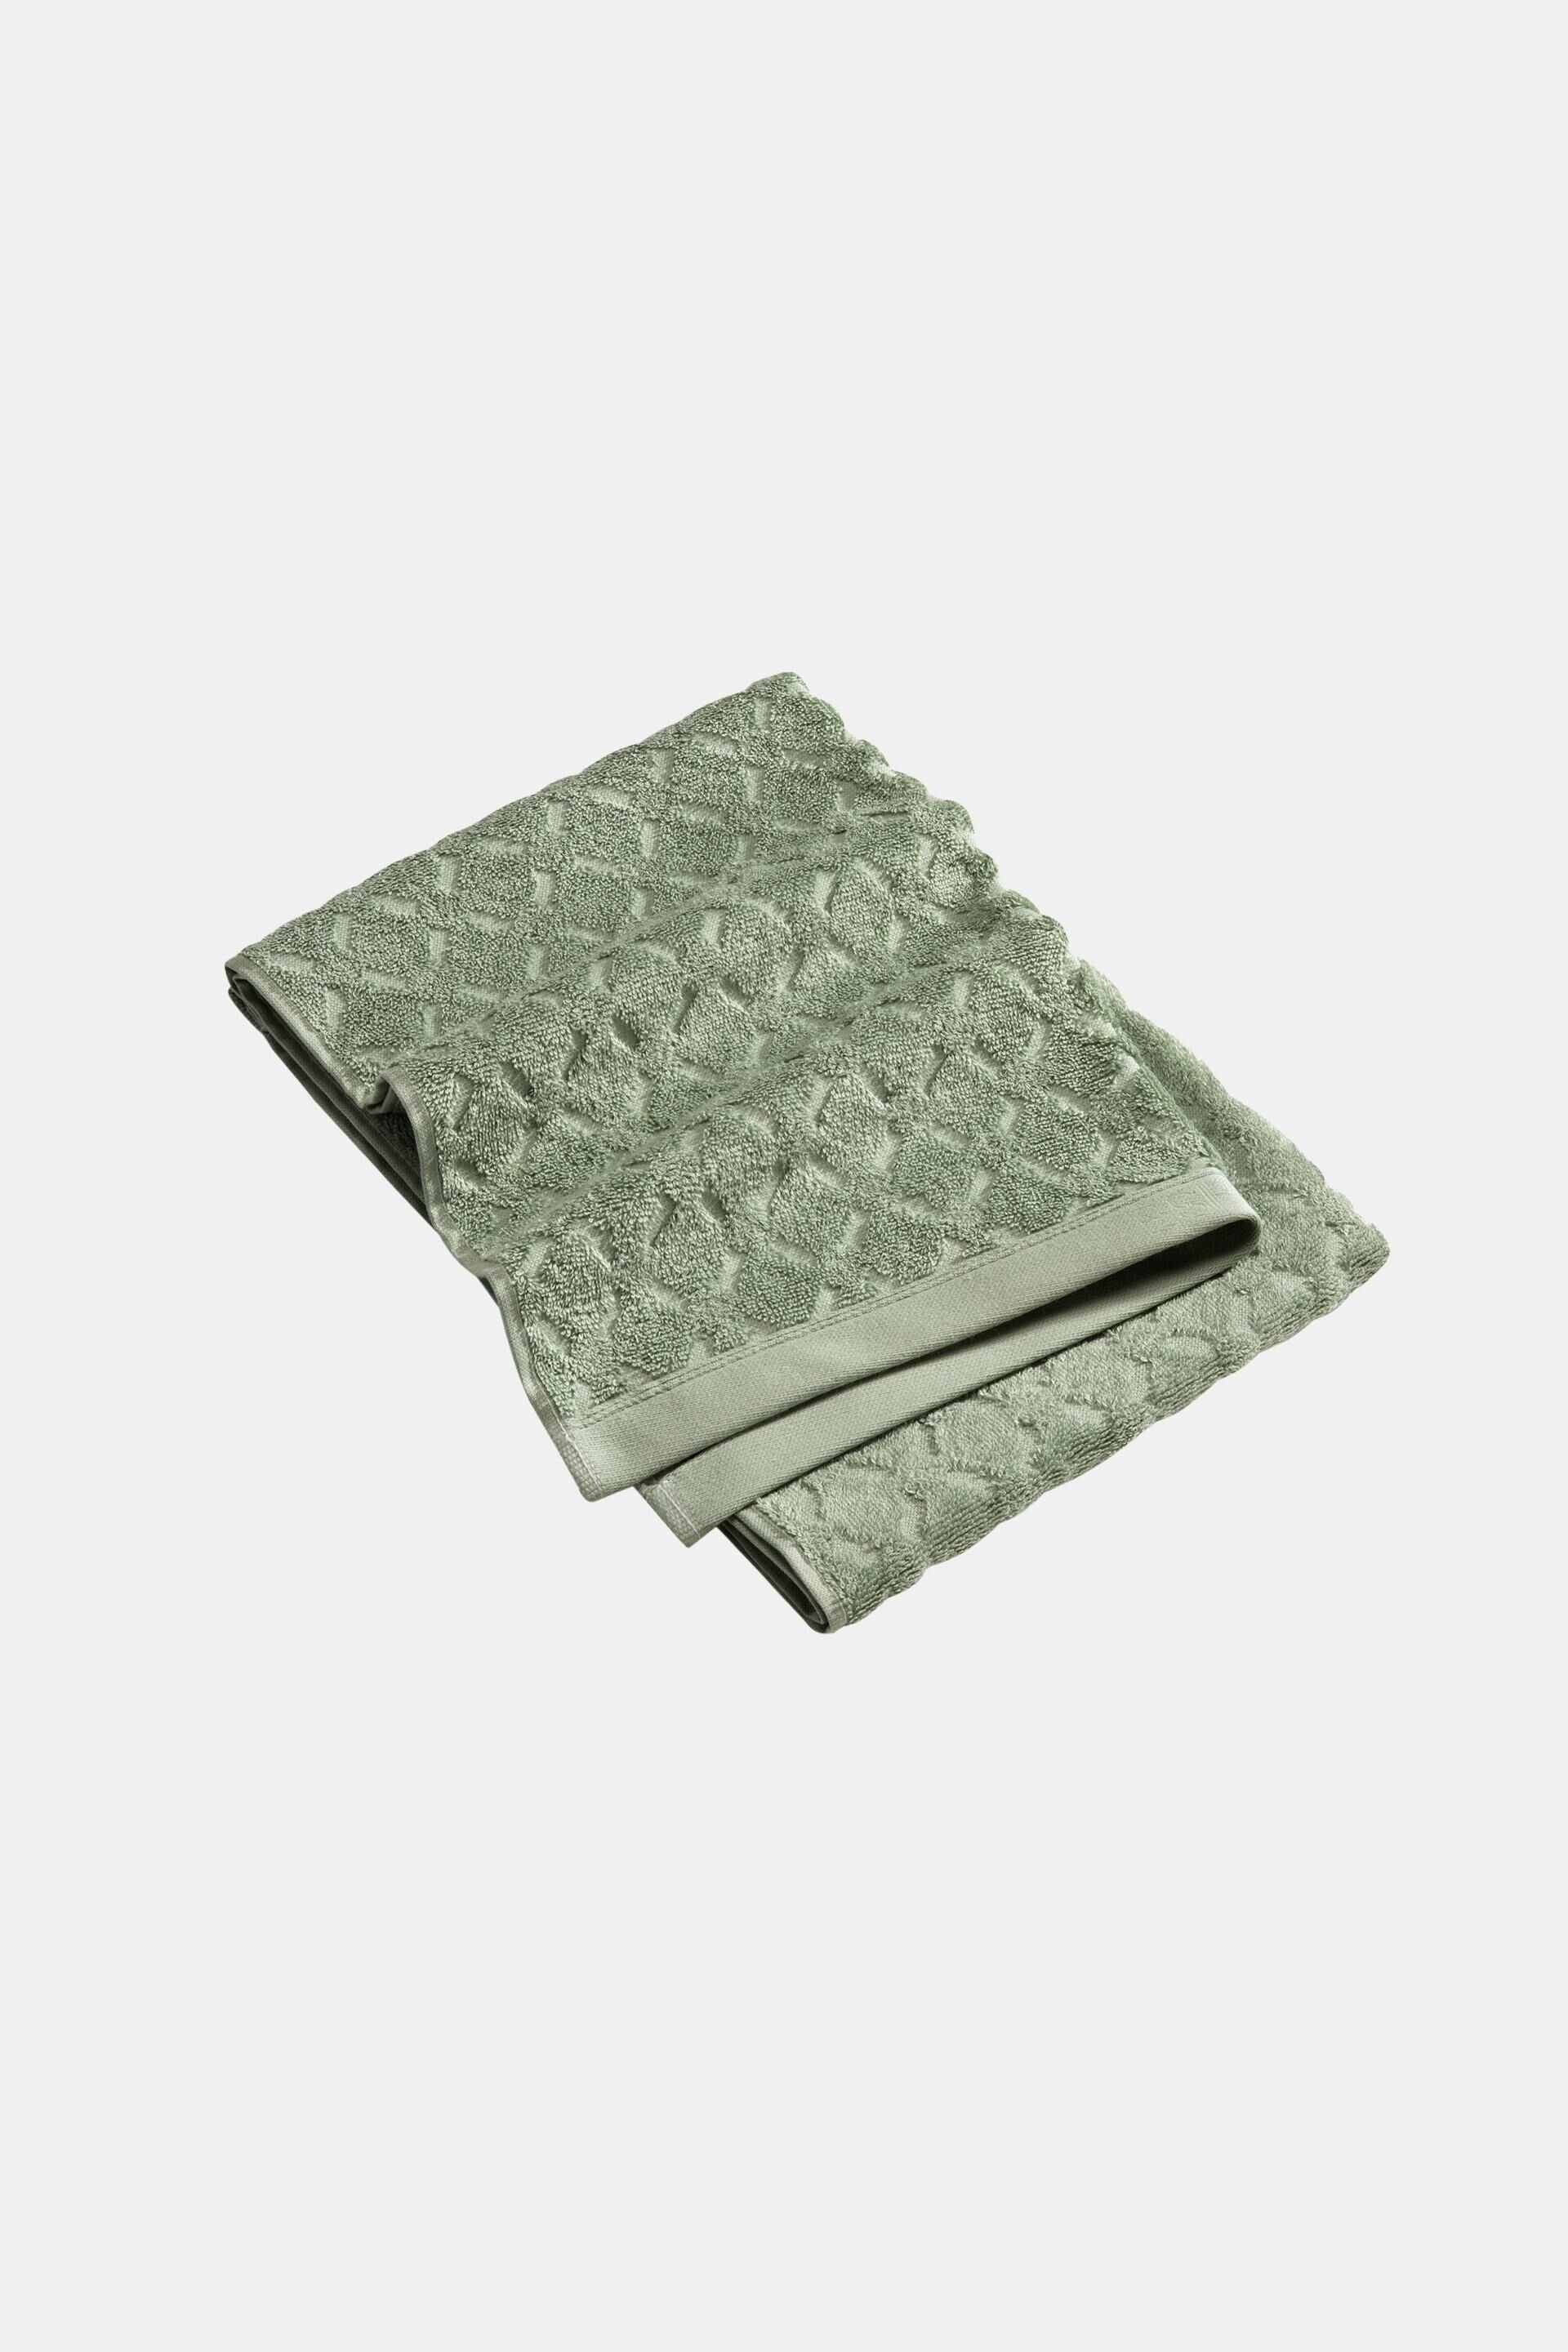 Esprit organic 100% cotton Towel of made